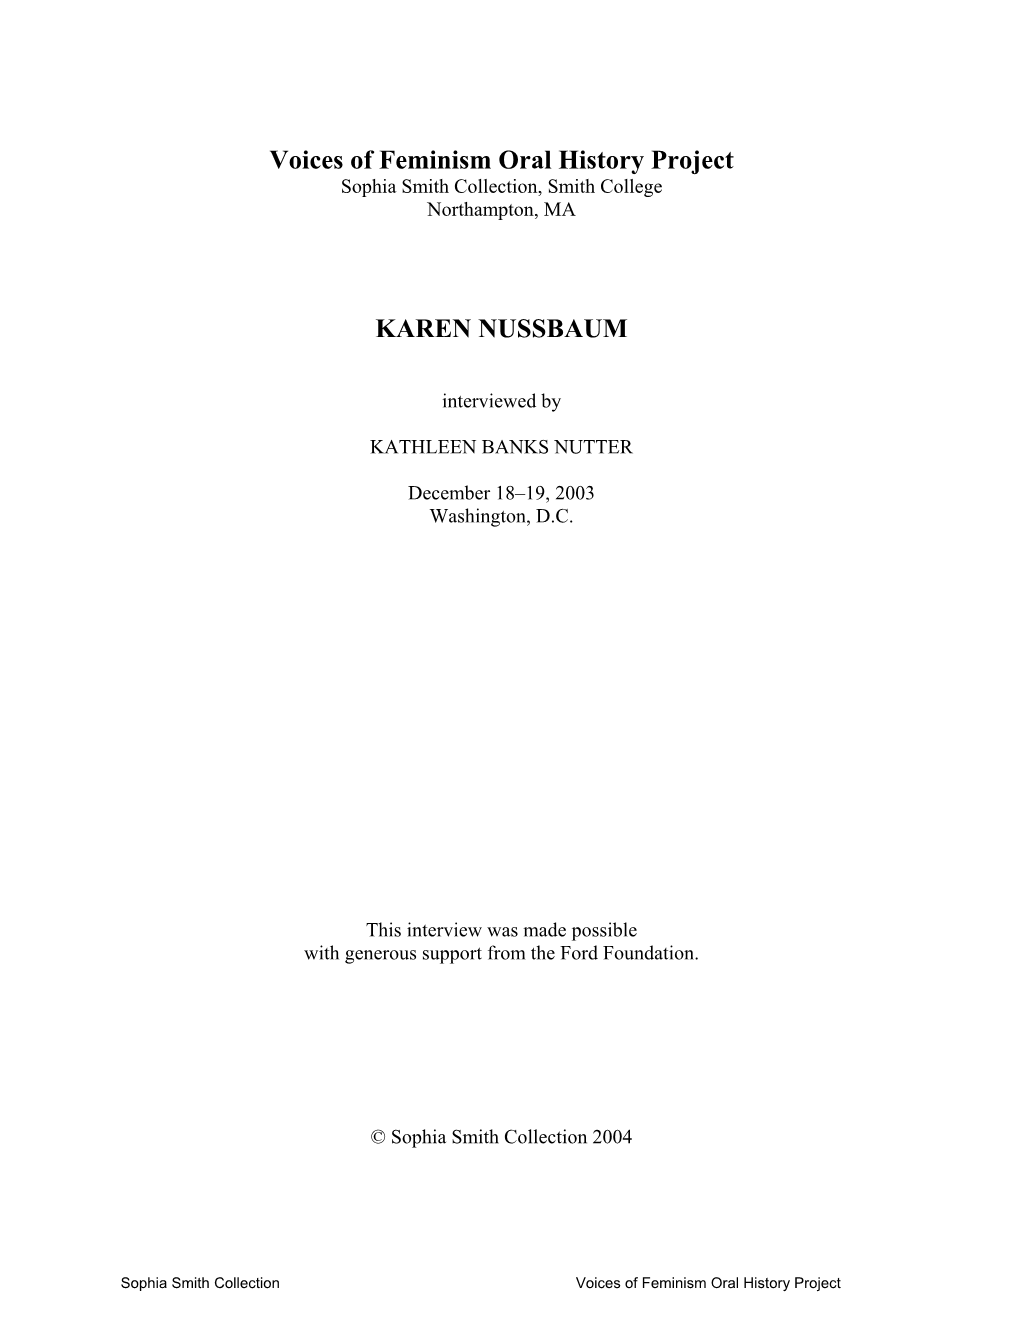 Voices of Feminism Oral History Project: Nussbaum, Karen